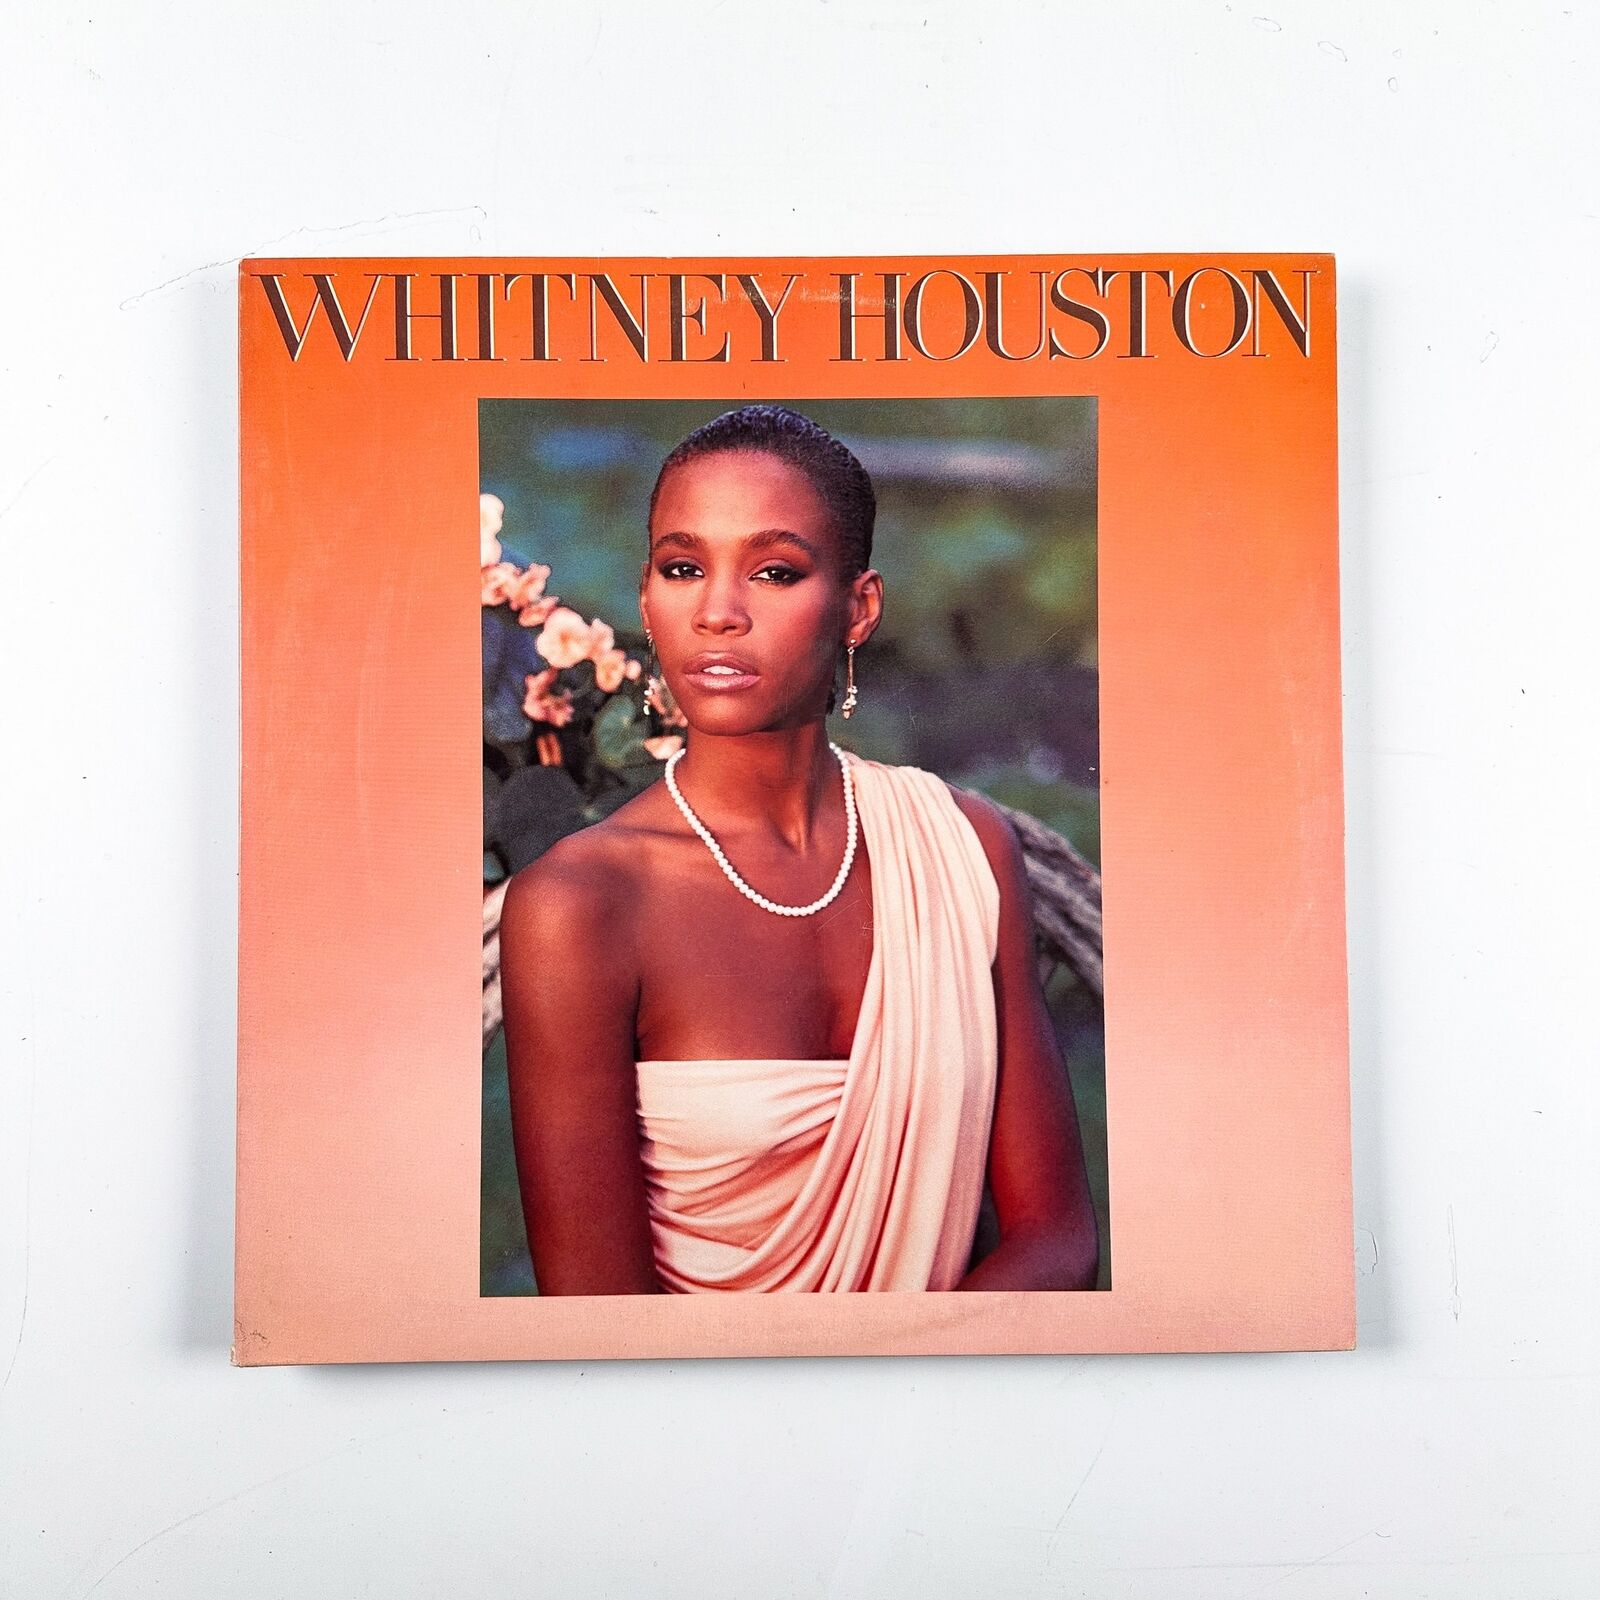 Whitney Houston - Whitney Houston - Vinyl LP Record - 1985